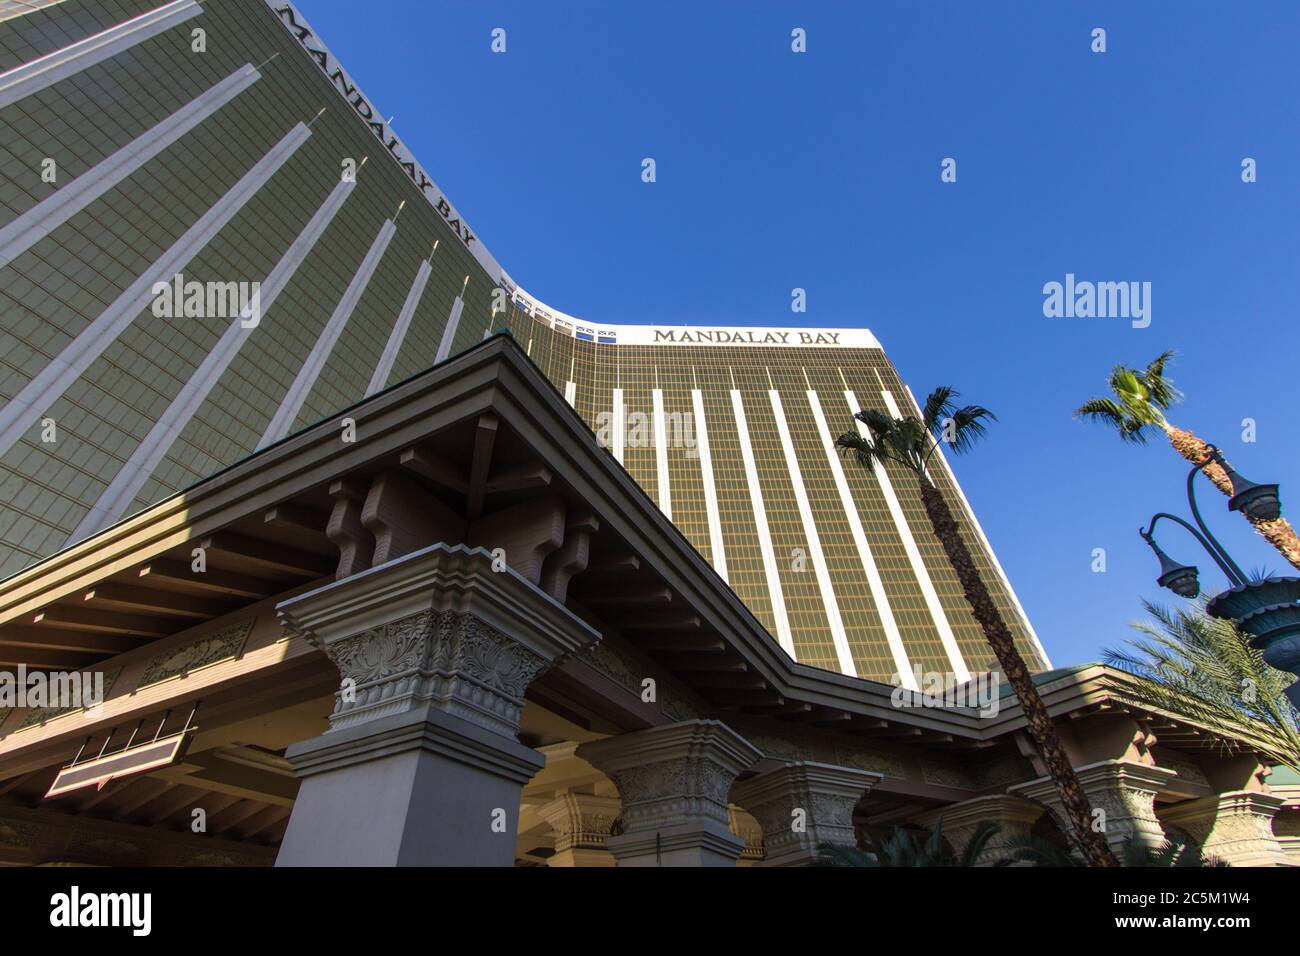 Las Vegas, Nevada, USA - February 20, 2020: Exterior of the Mandalay Bay Casino and resort on the Las Vegas Strip. Stock Photo